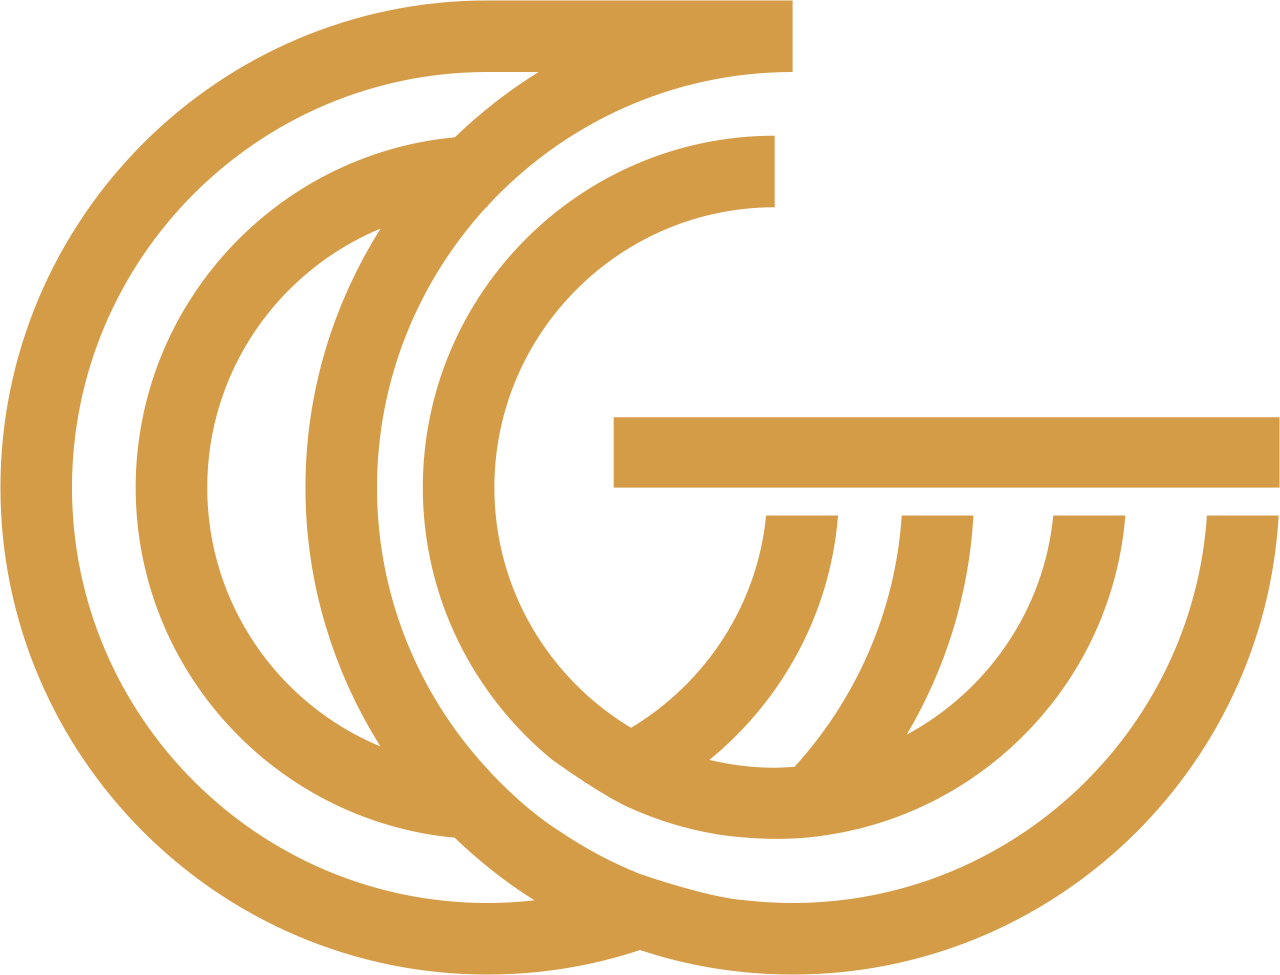 Gourmet Gatherings's logo